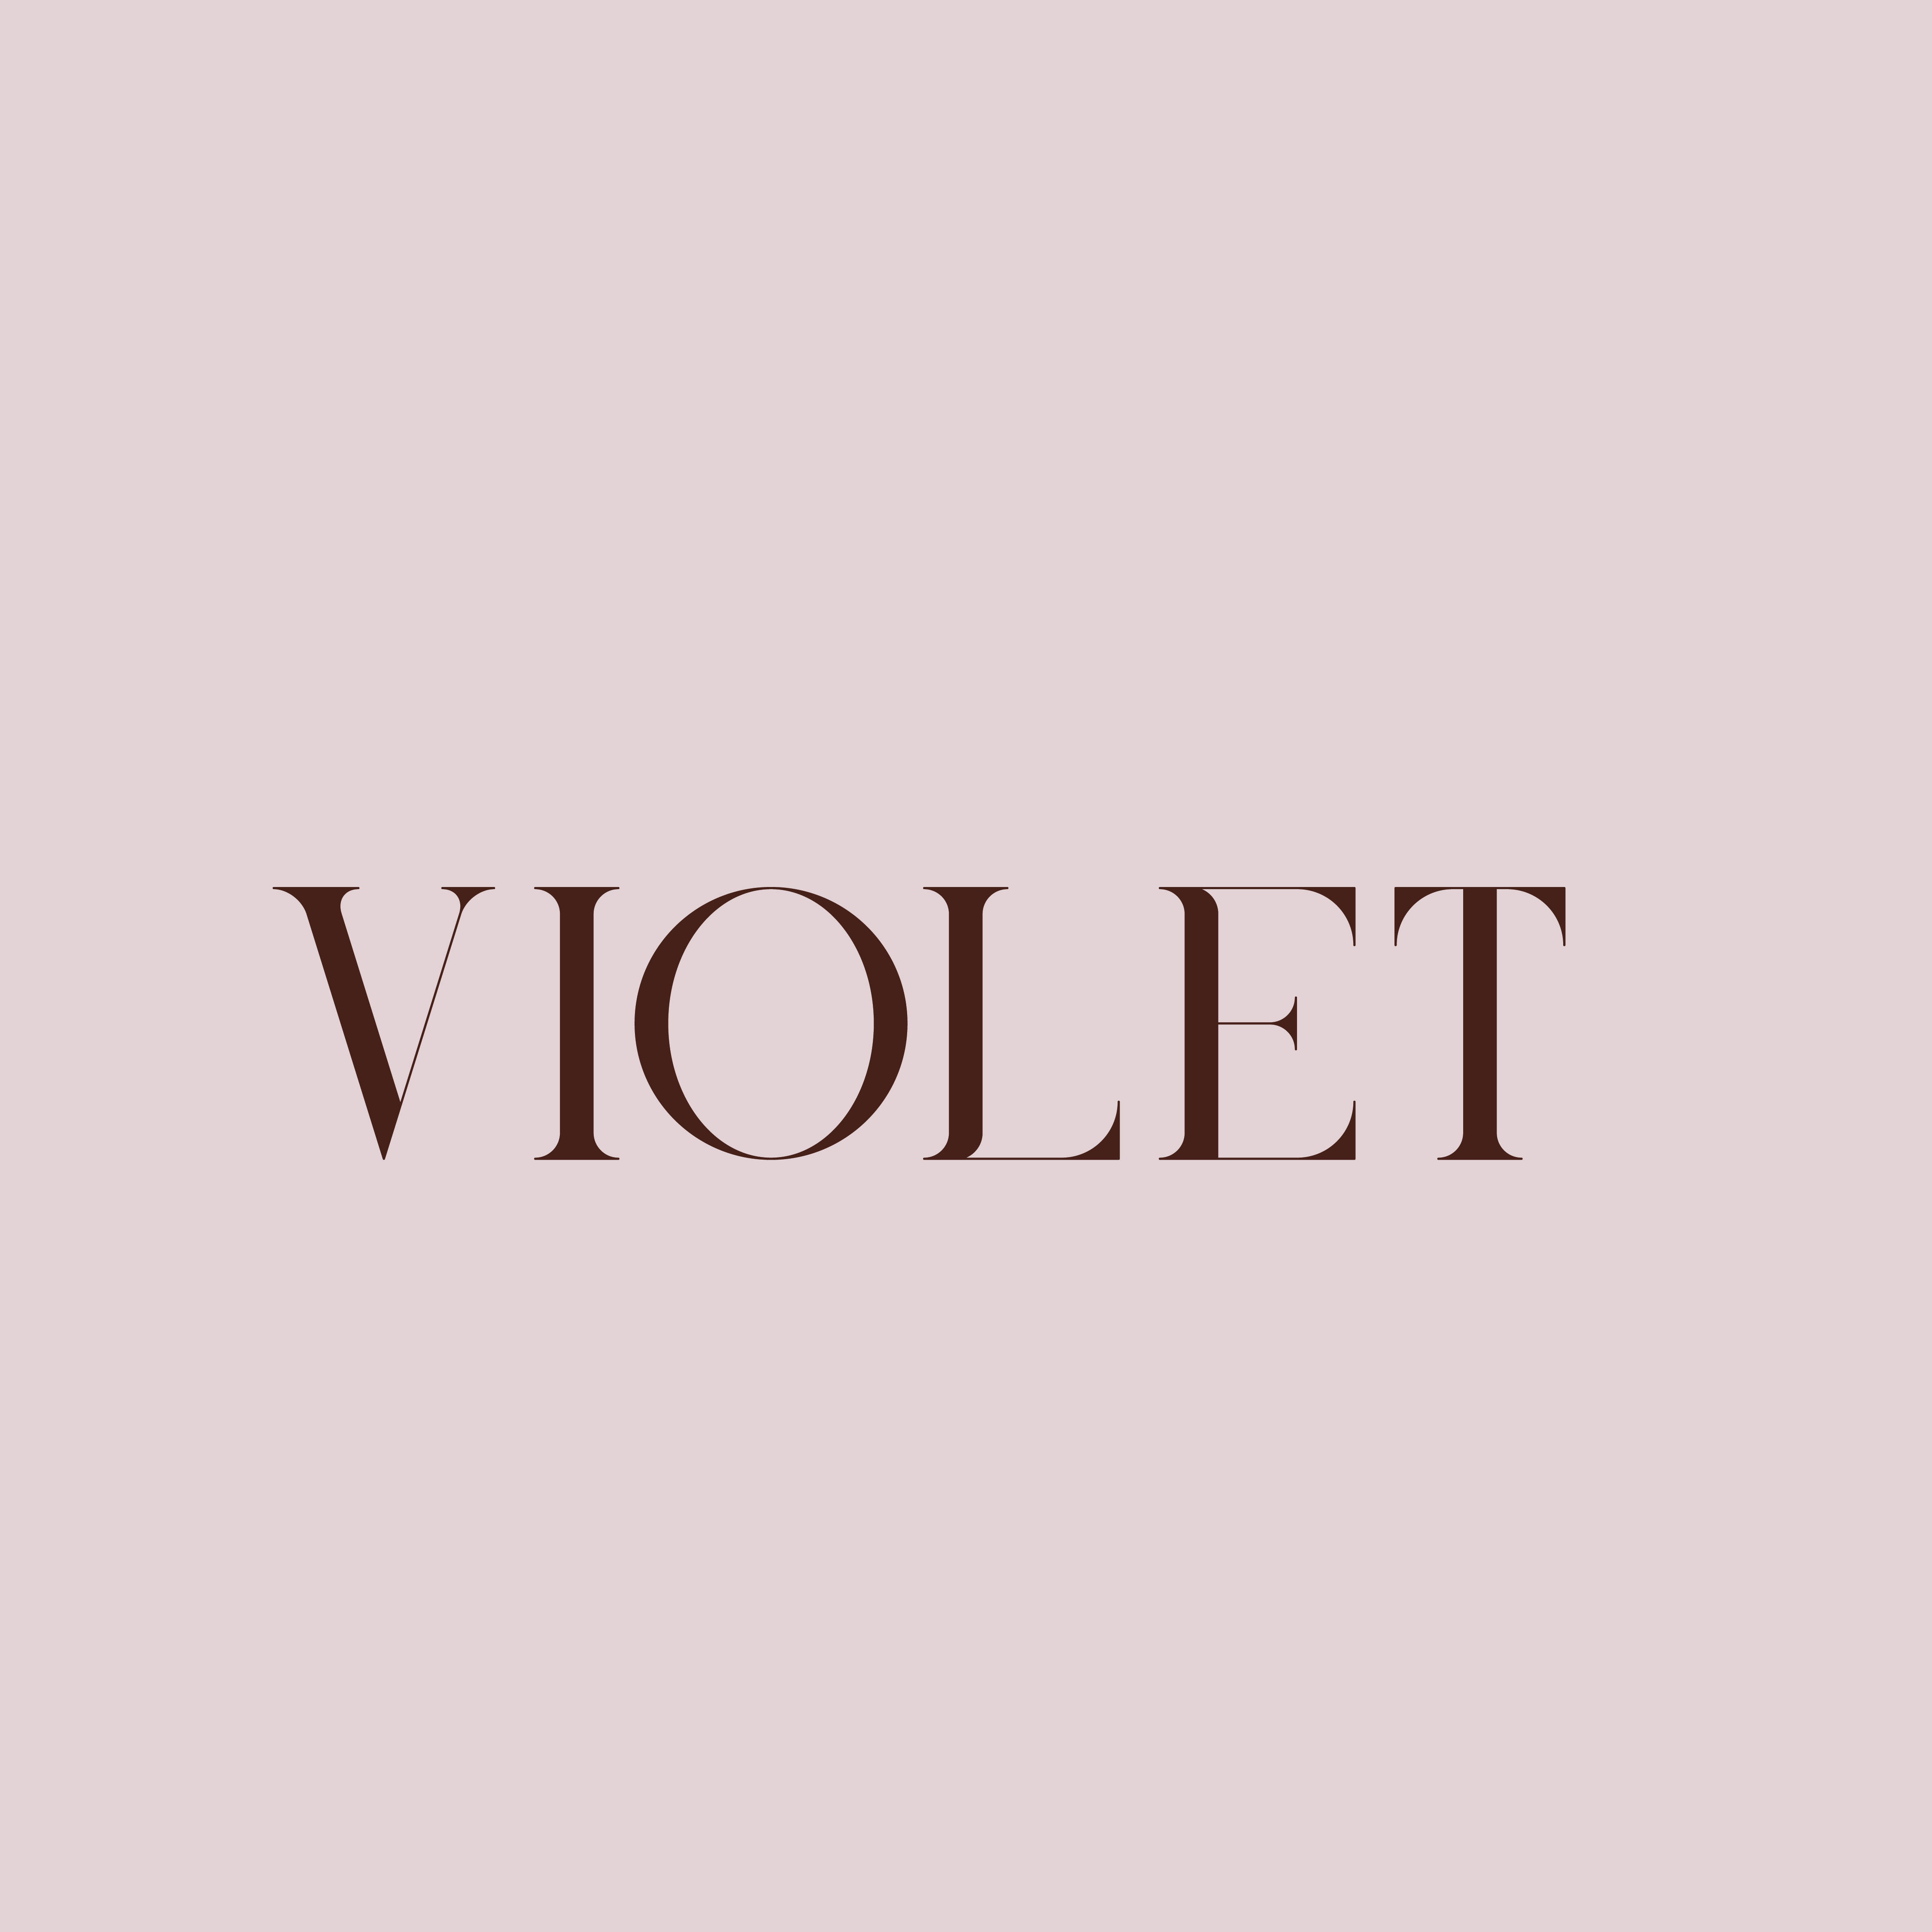 Violet by Sarah